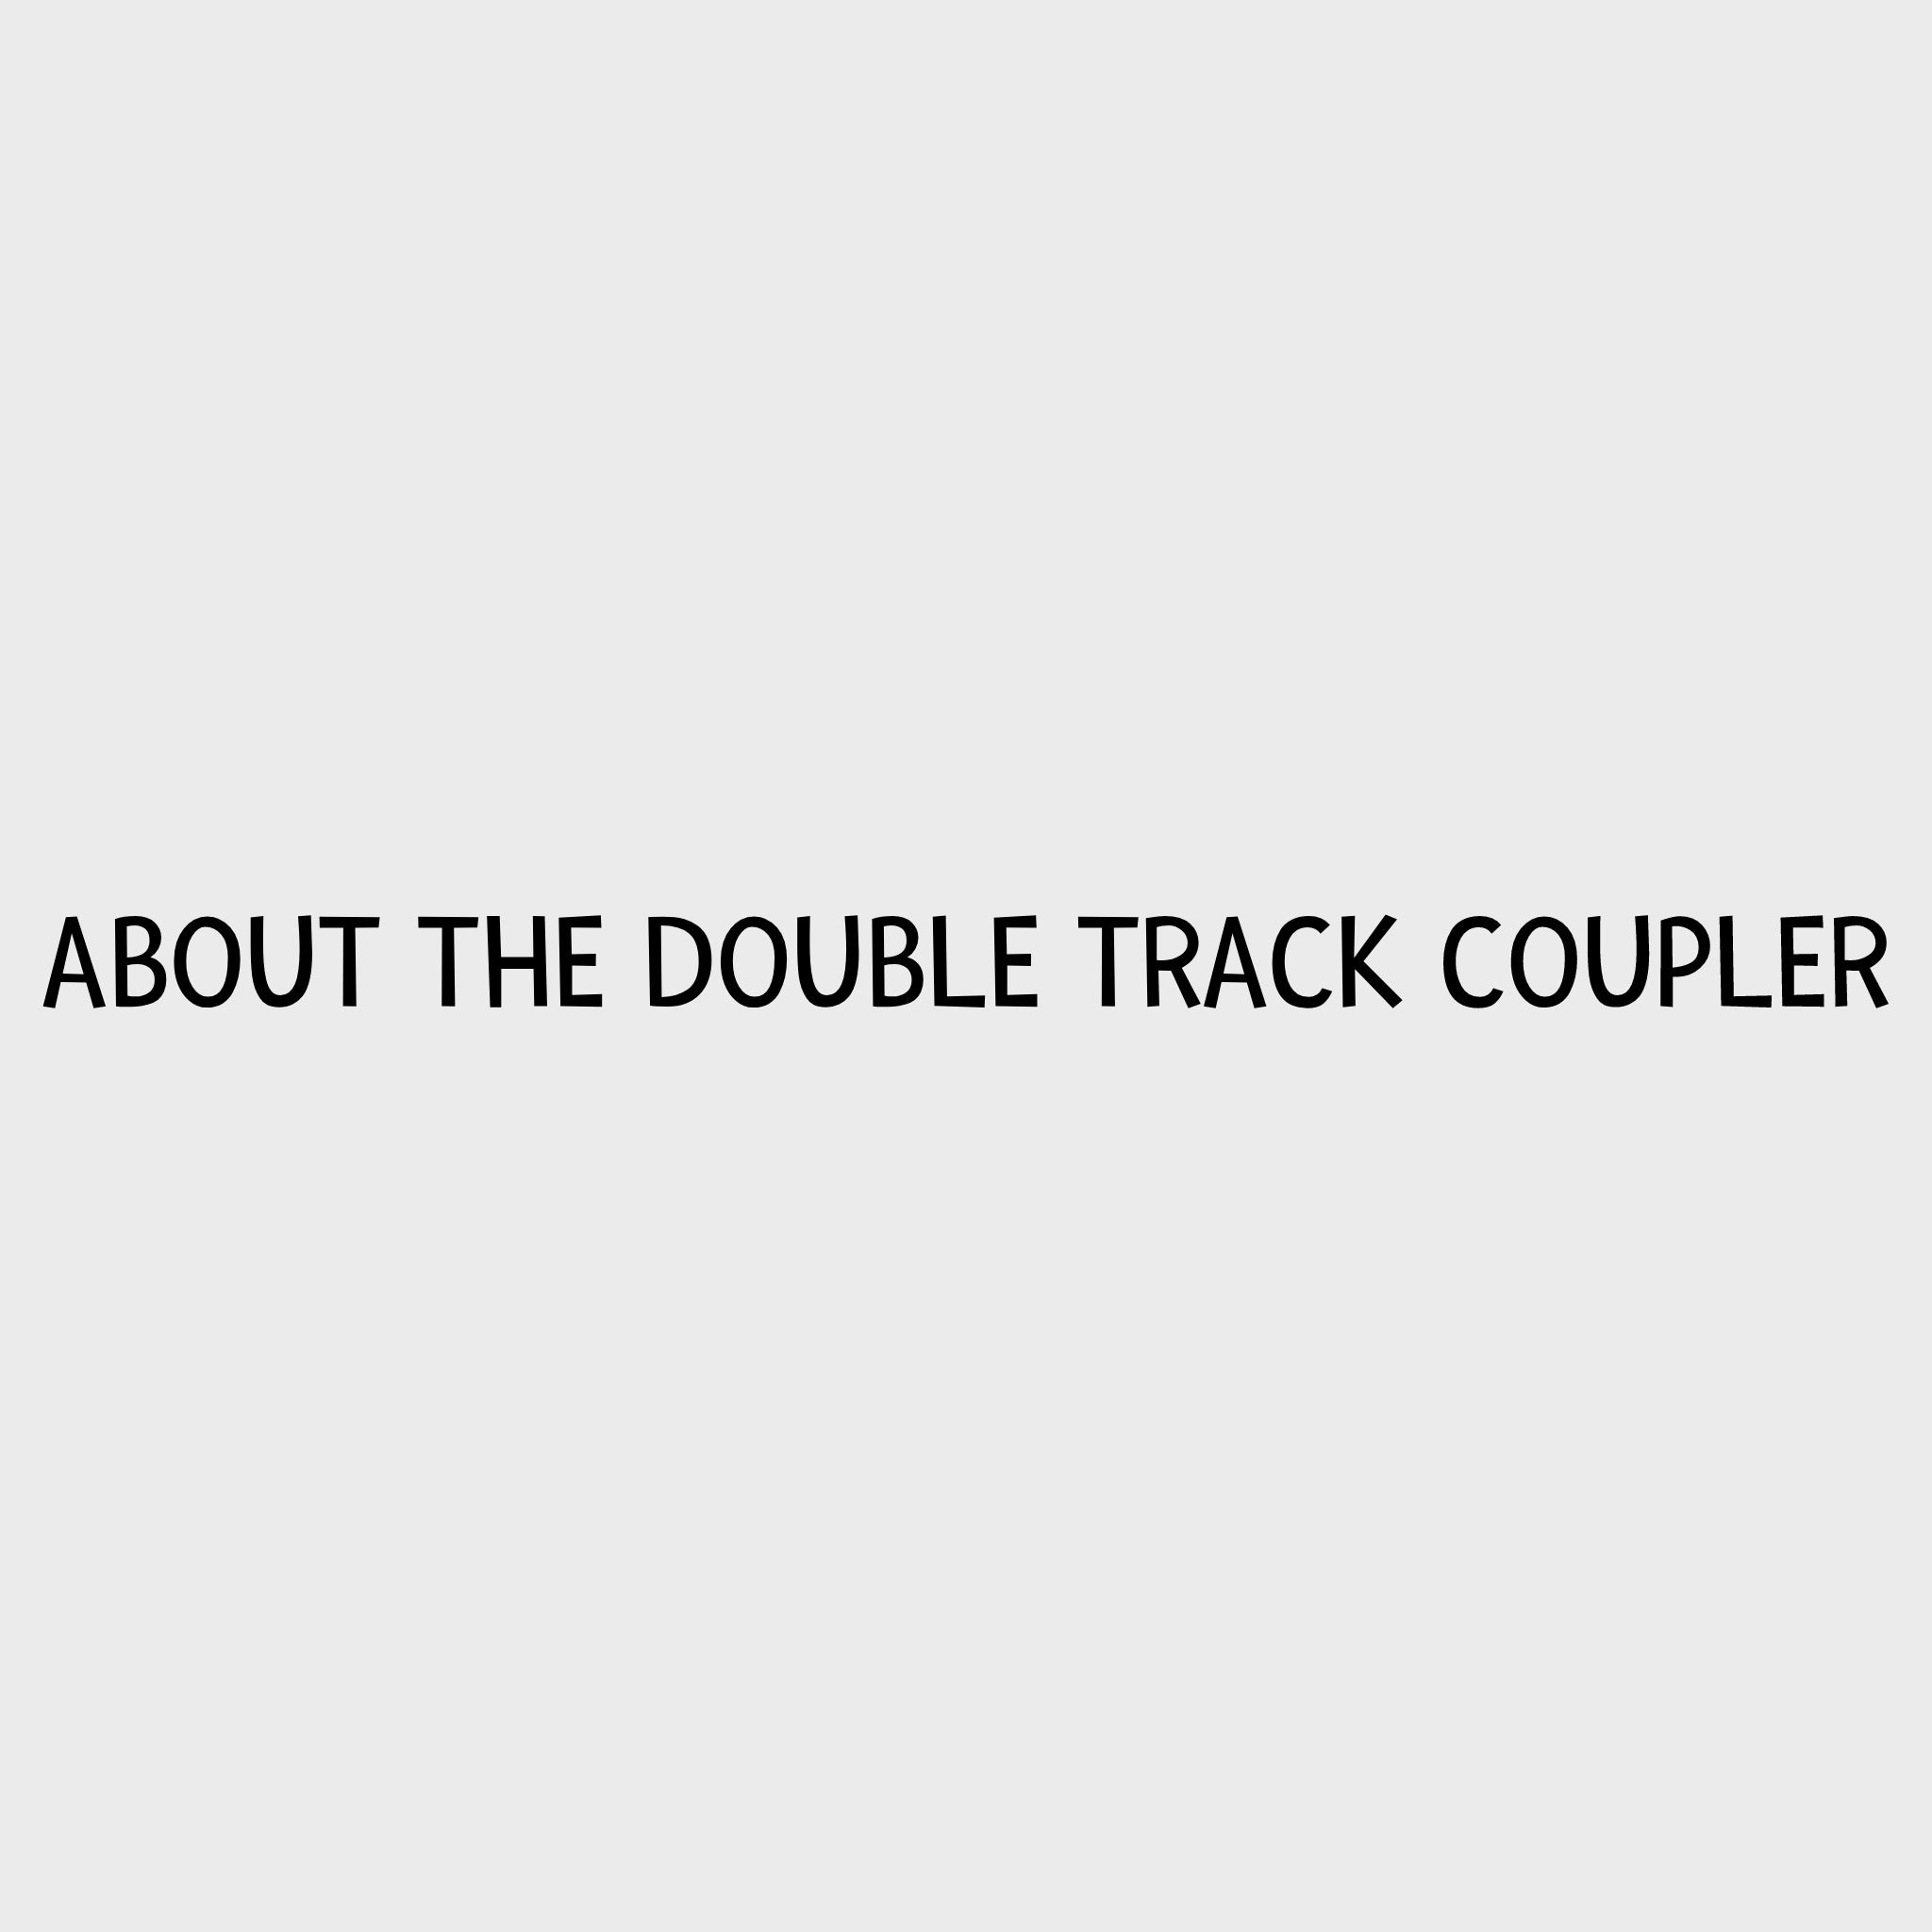 Video - Ruffwear Double Track Coupler